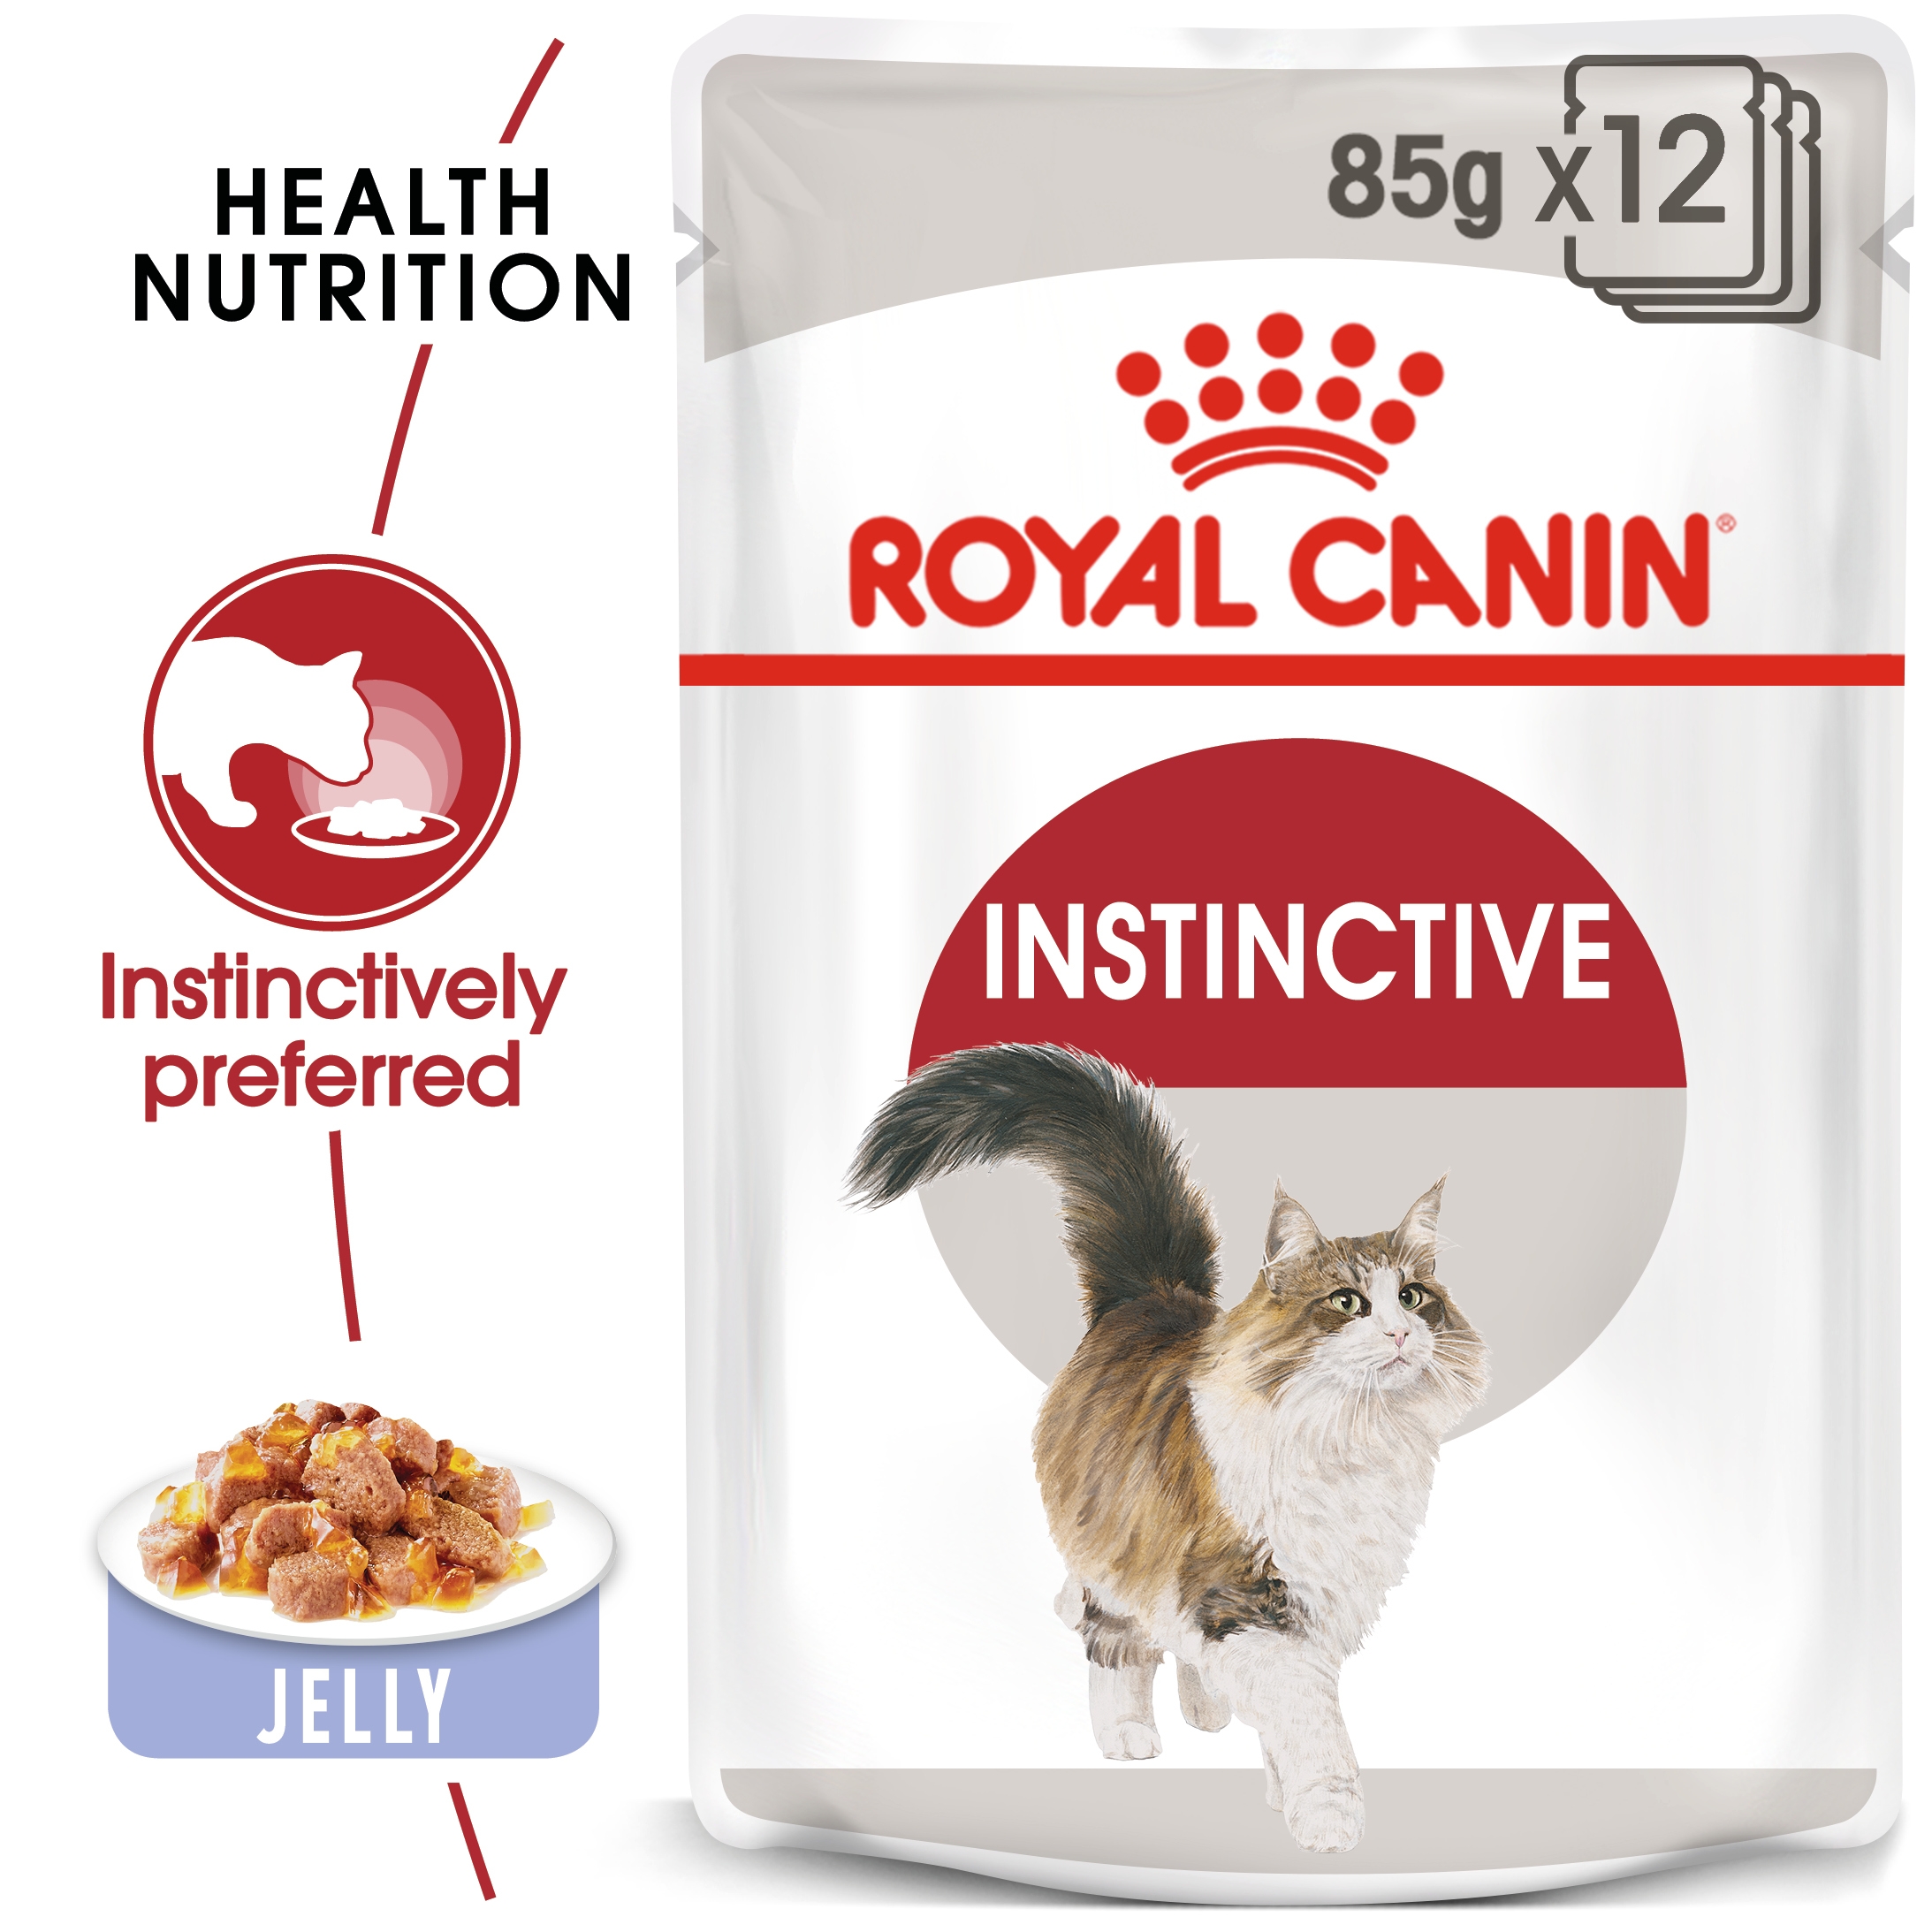 Royal Canin Feline Health Nutrition Instinctive Adult Cats Jelly (Wet Food )